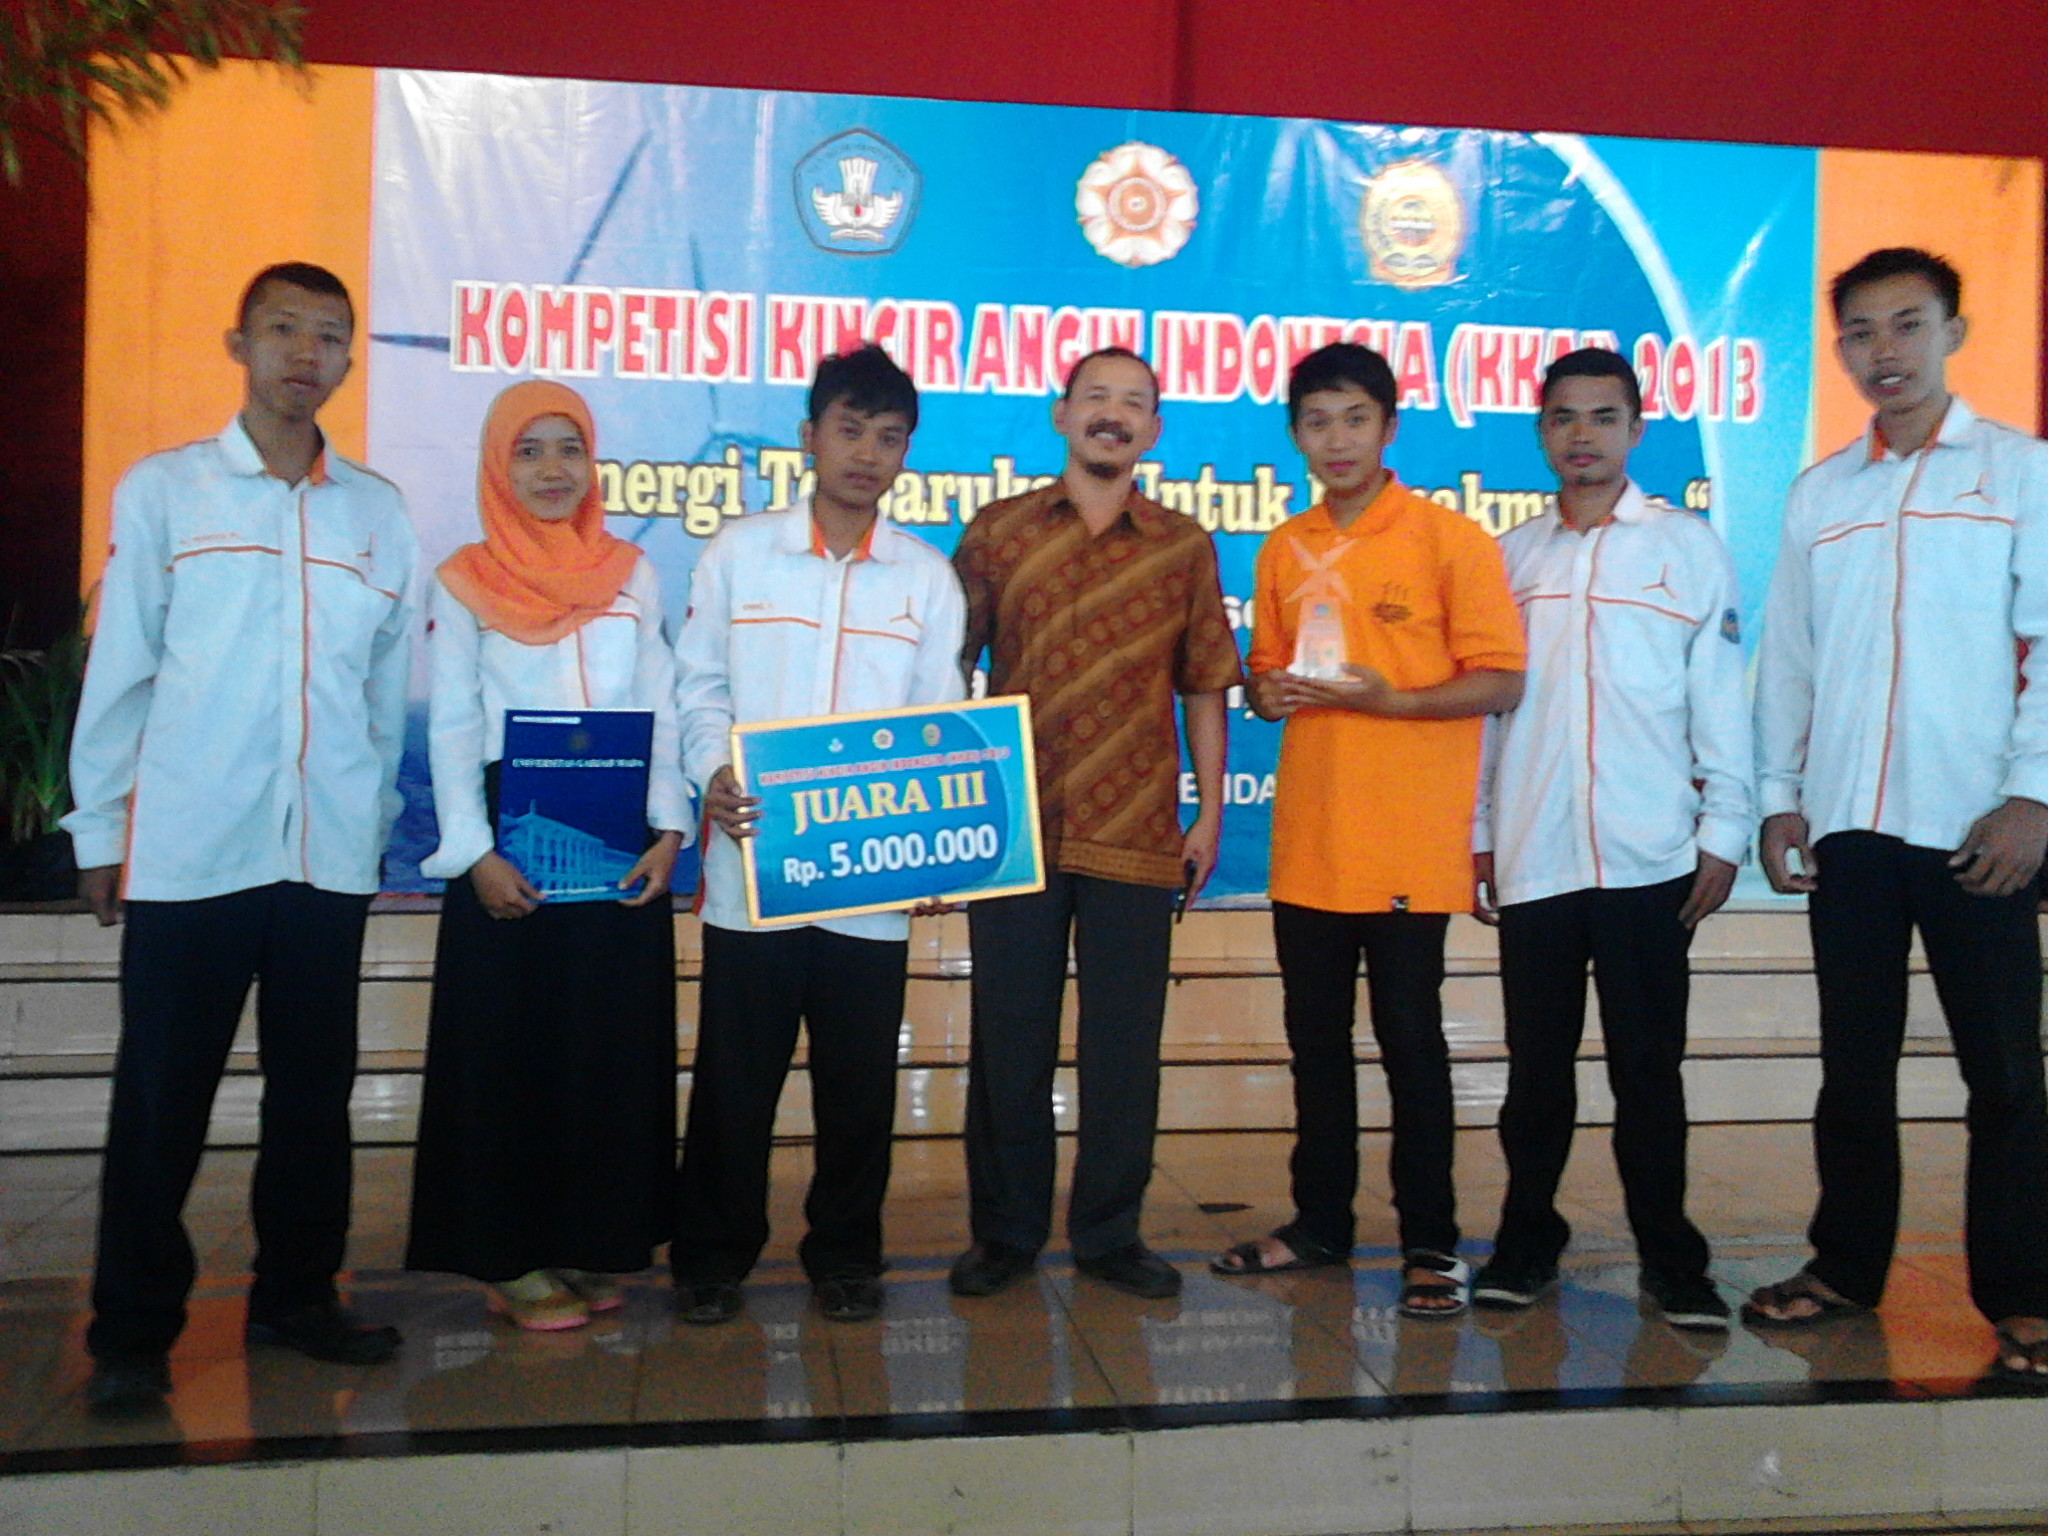 Foto KKAI (Kompetisi Kincir Angin Indonesia) 2013 